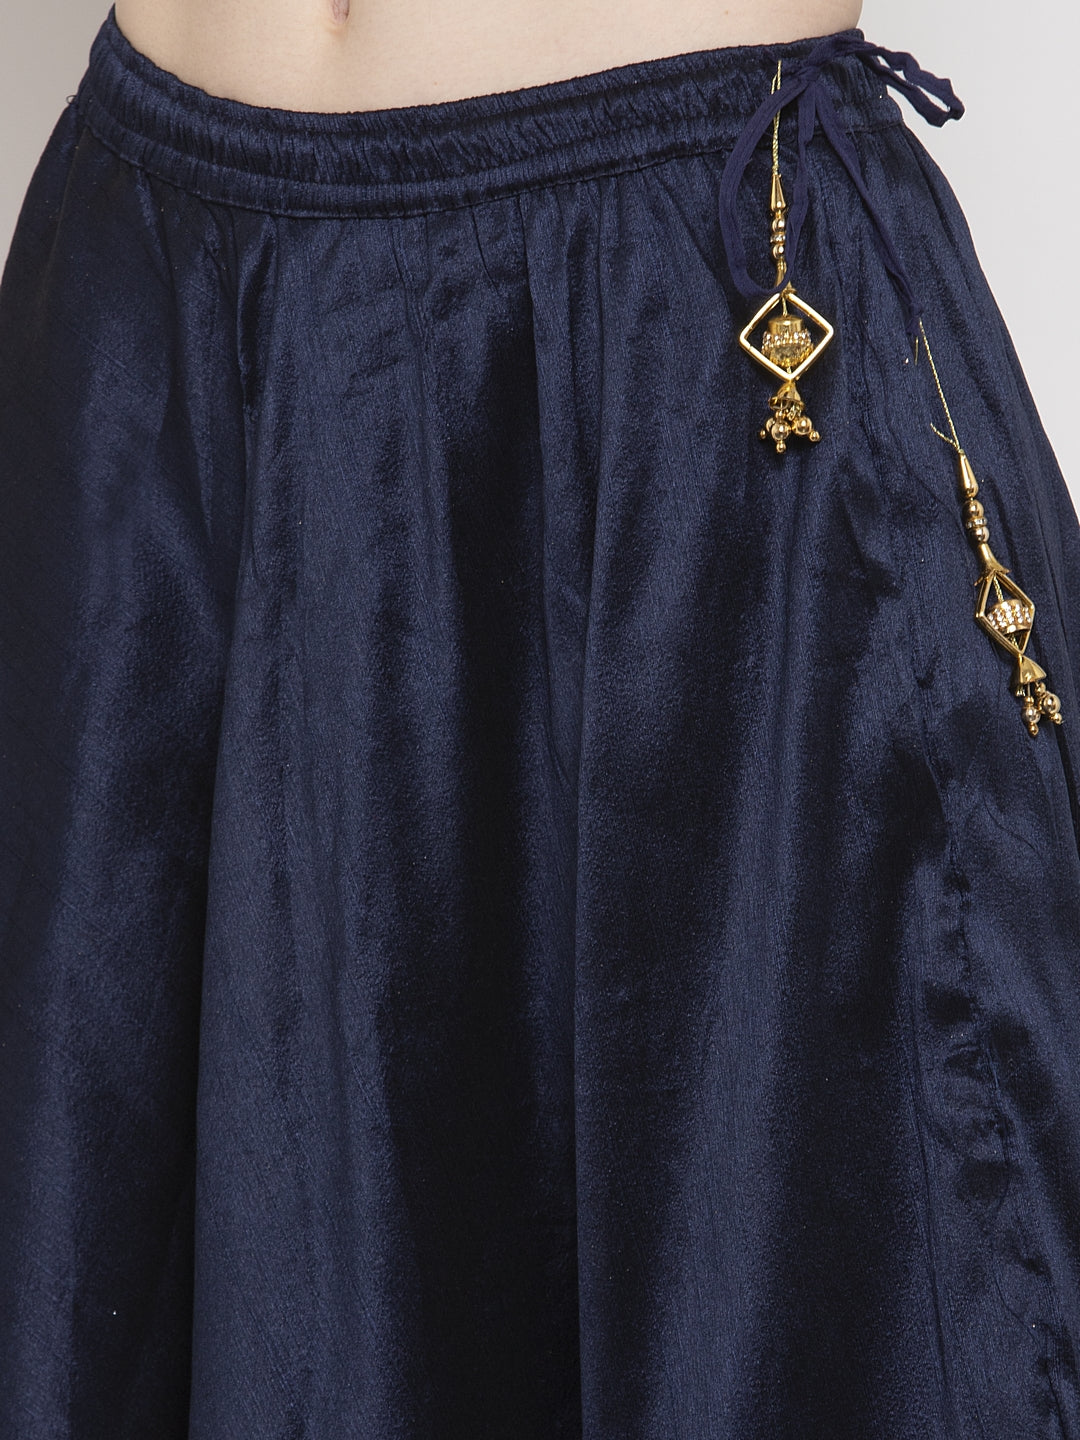 Women's Navy Blue Flared Embellished Skirt - Wahe-NOOR